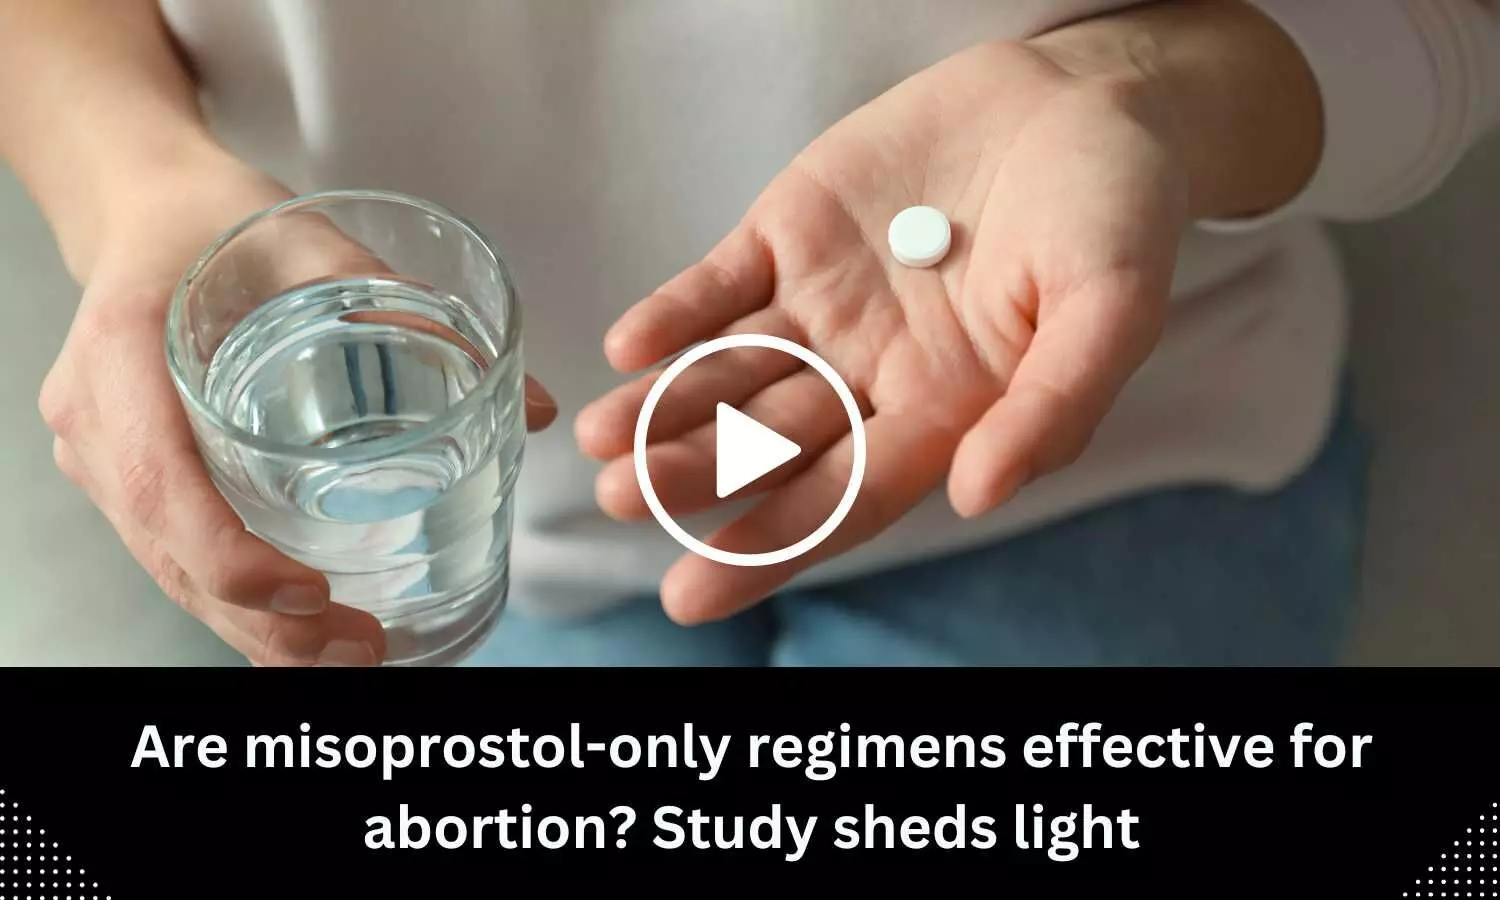 Are misoprostol-only regimens effective for abortion? Study sheds light